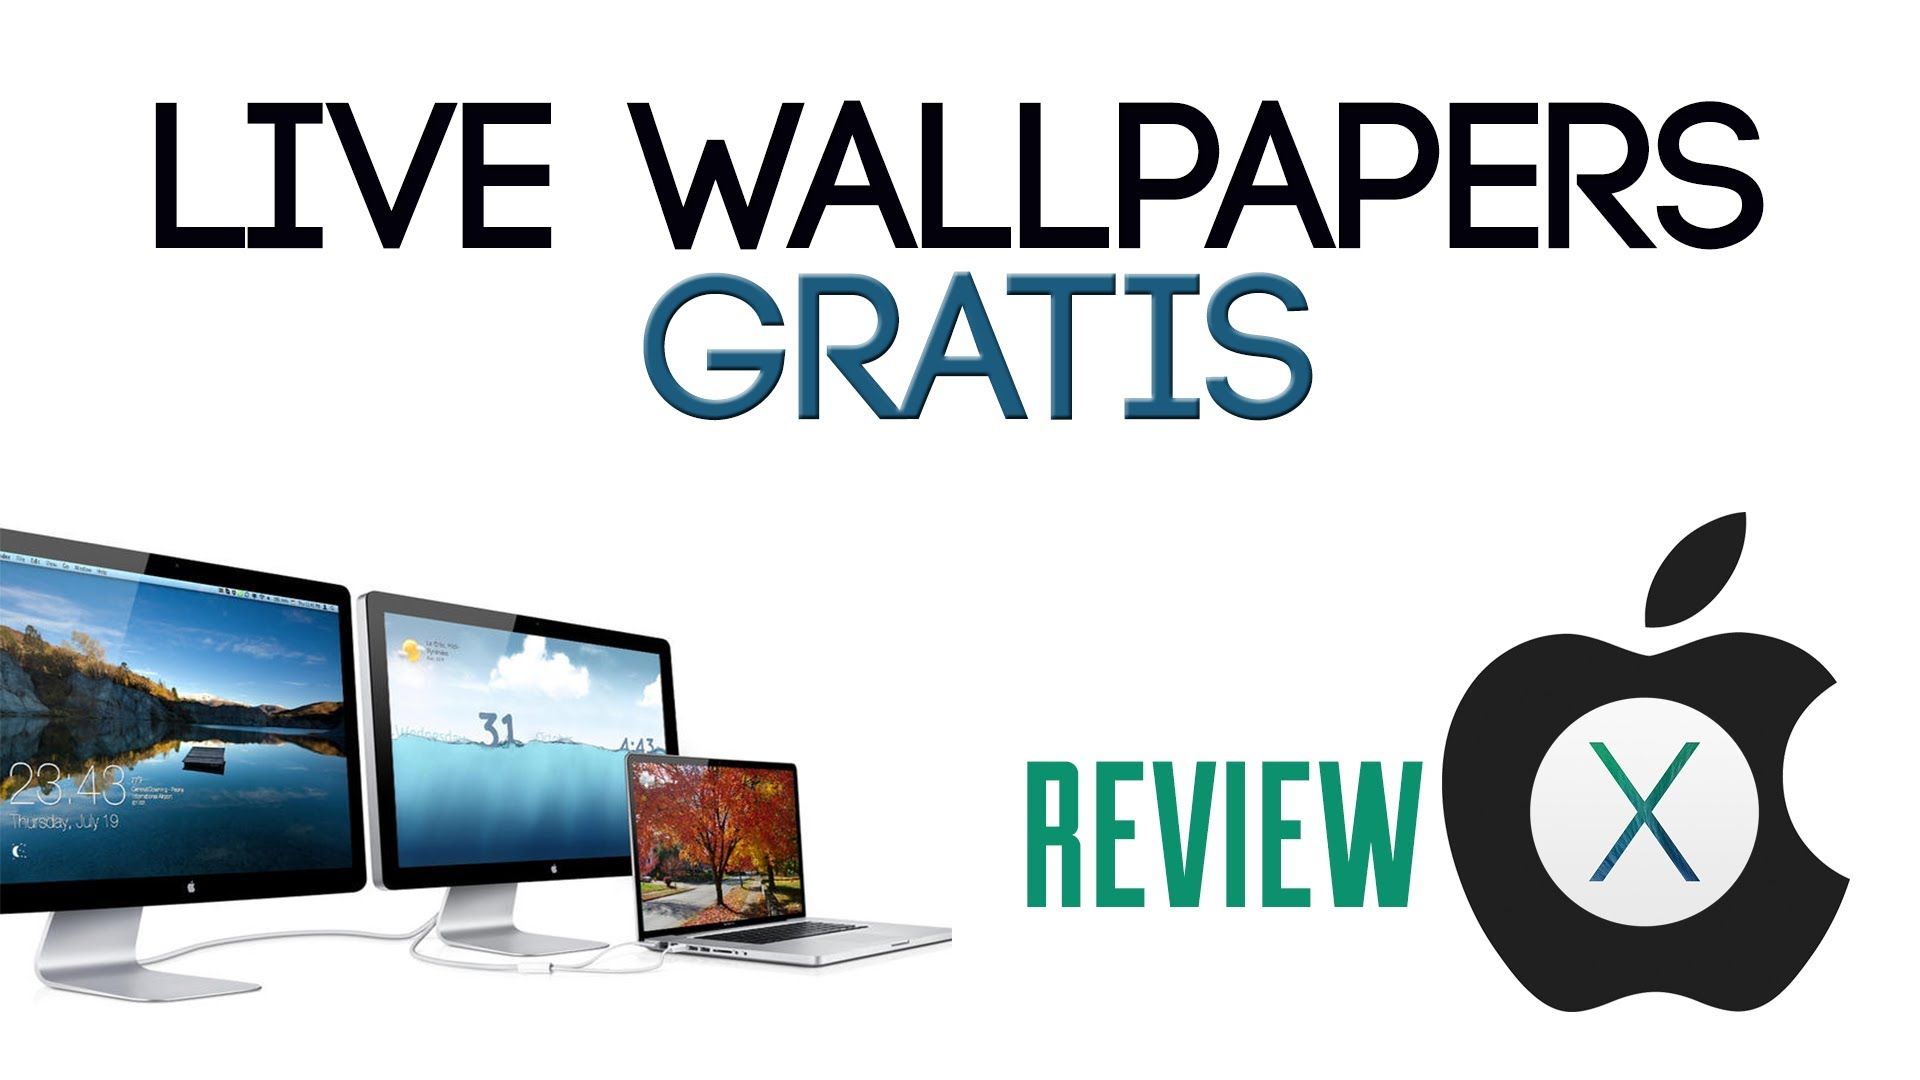 Live Wallpaper Review solo para Mac OS X YOSEMITE - YouTube